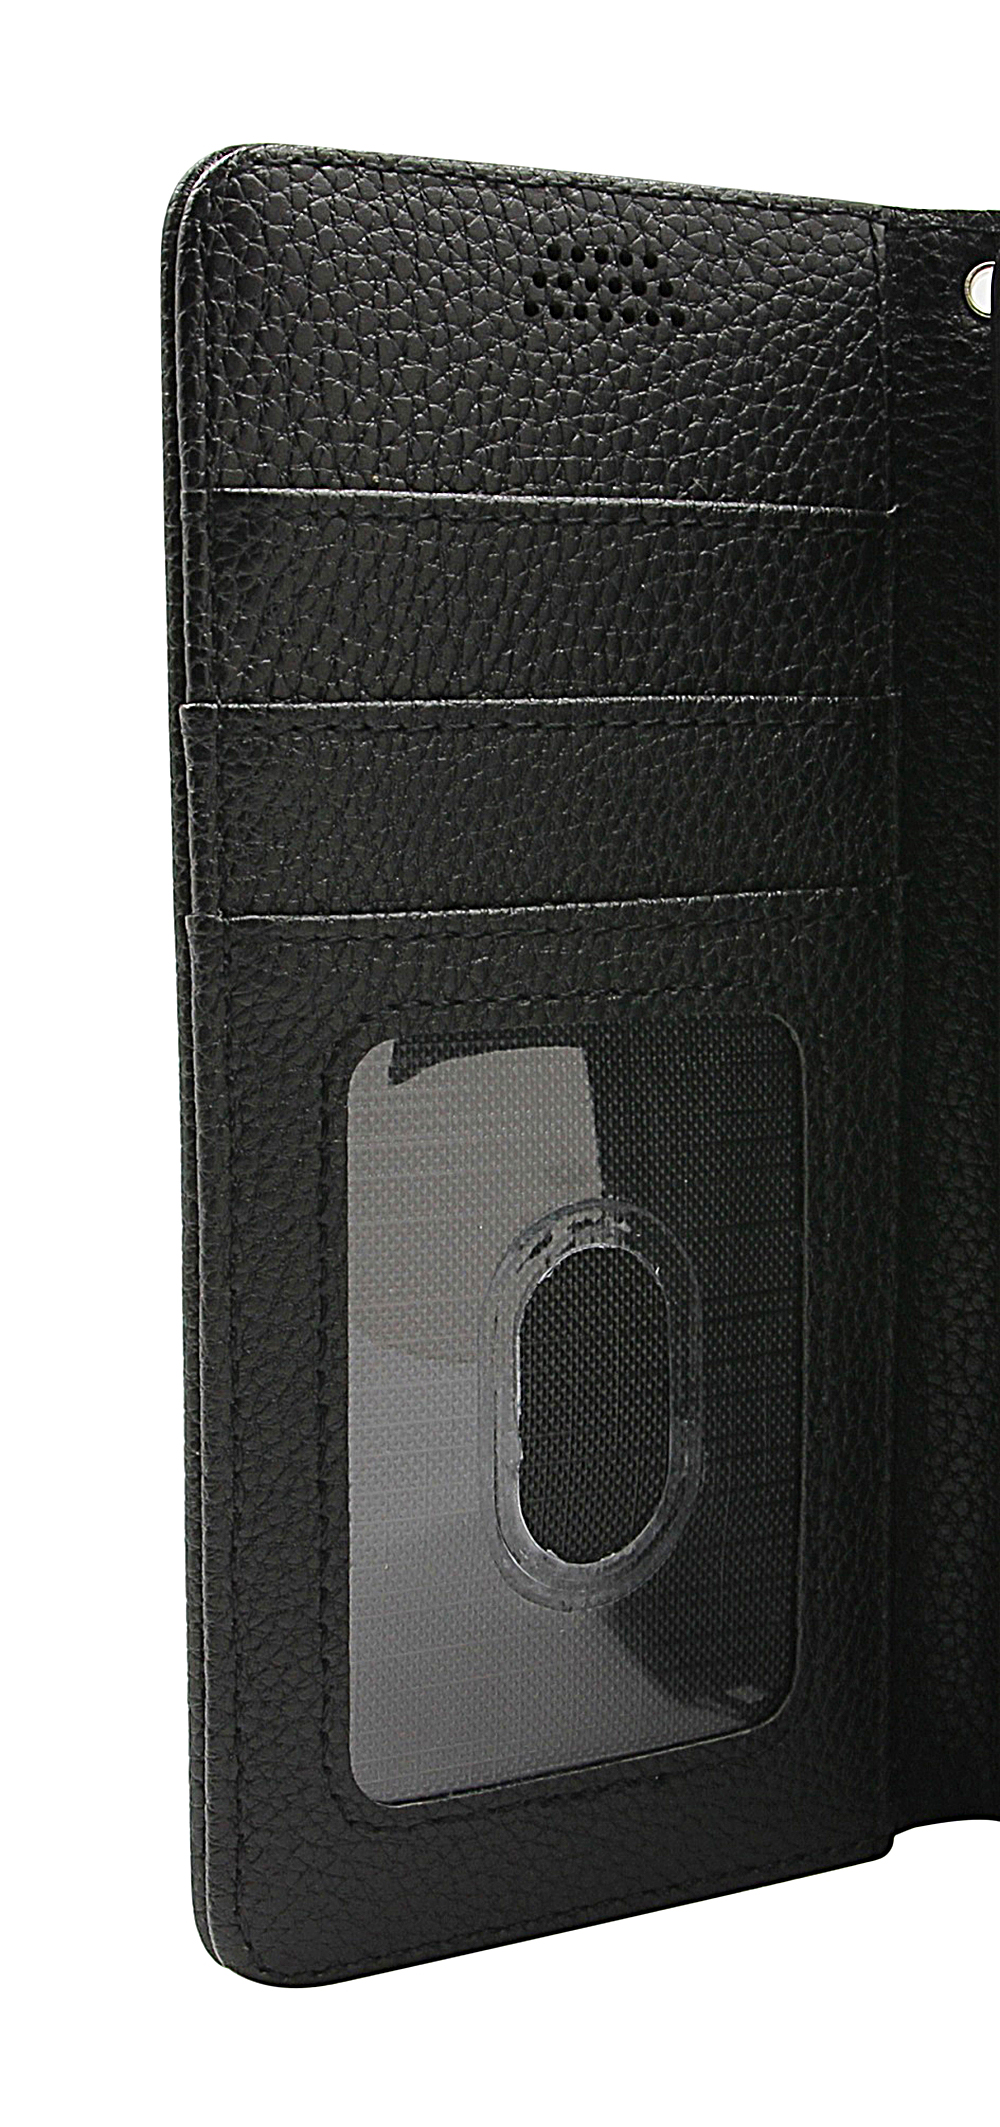 New Standcase Wallet Samsung Galaxy A32 5G (SM-A326B)